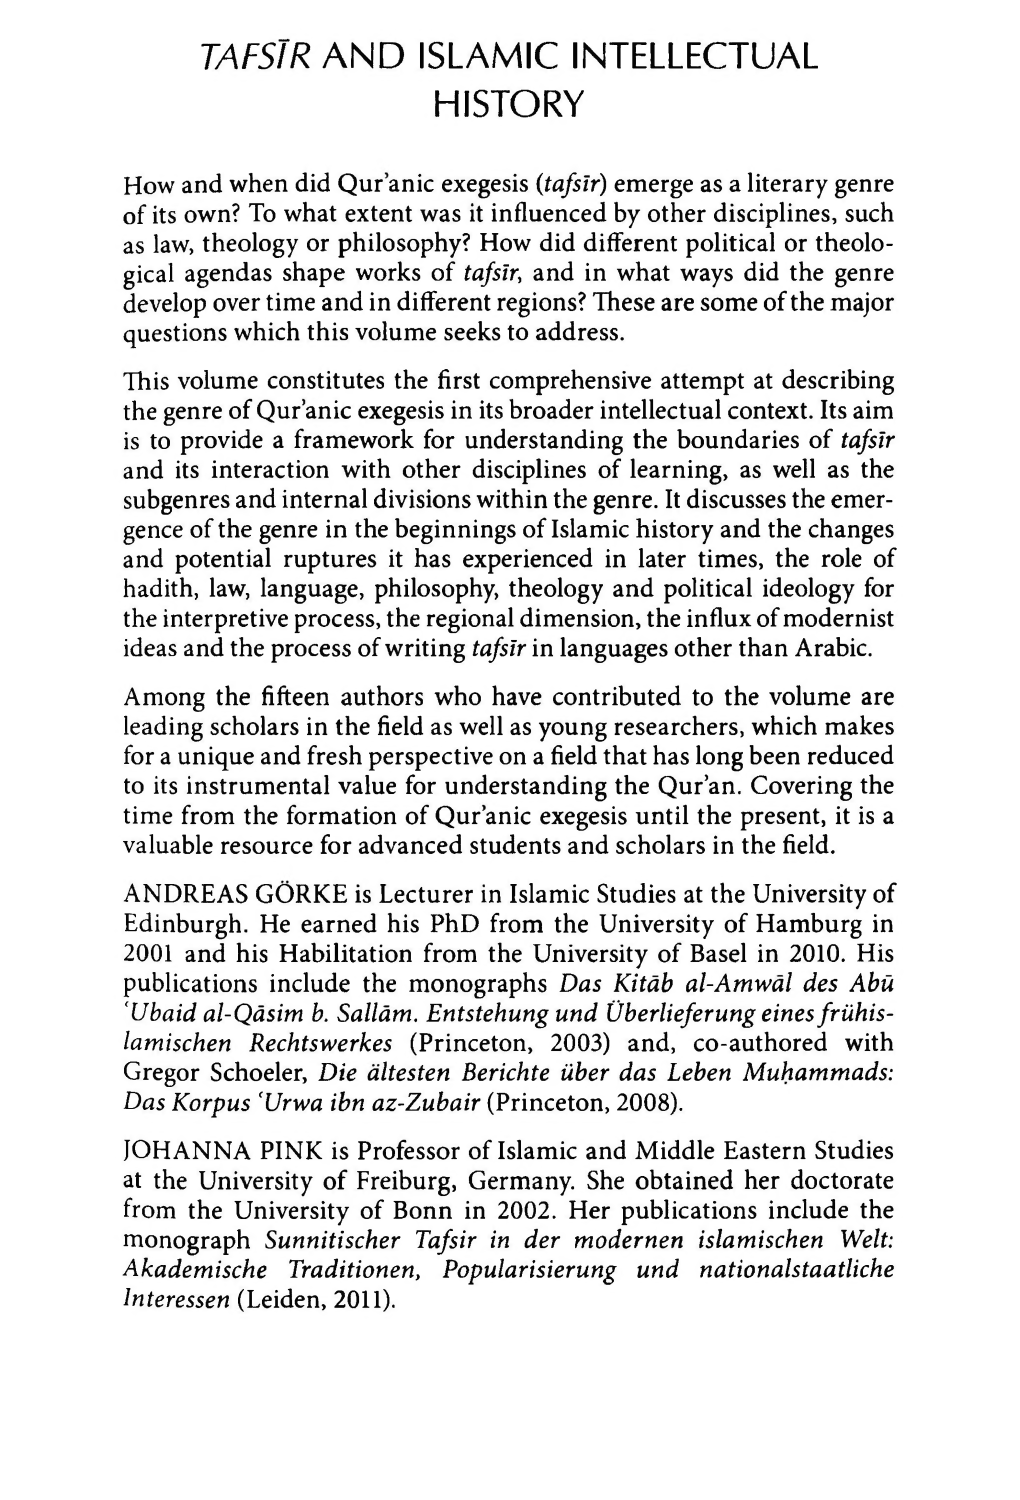 Tafsir and Islamic Intellectual History